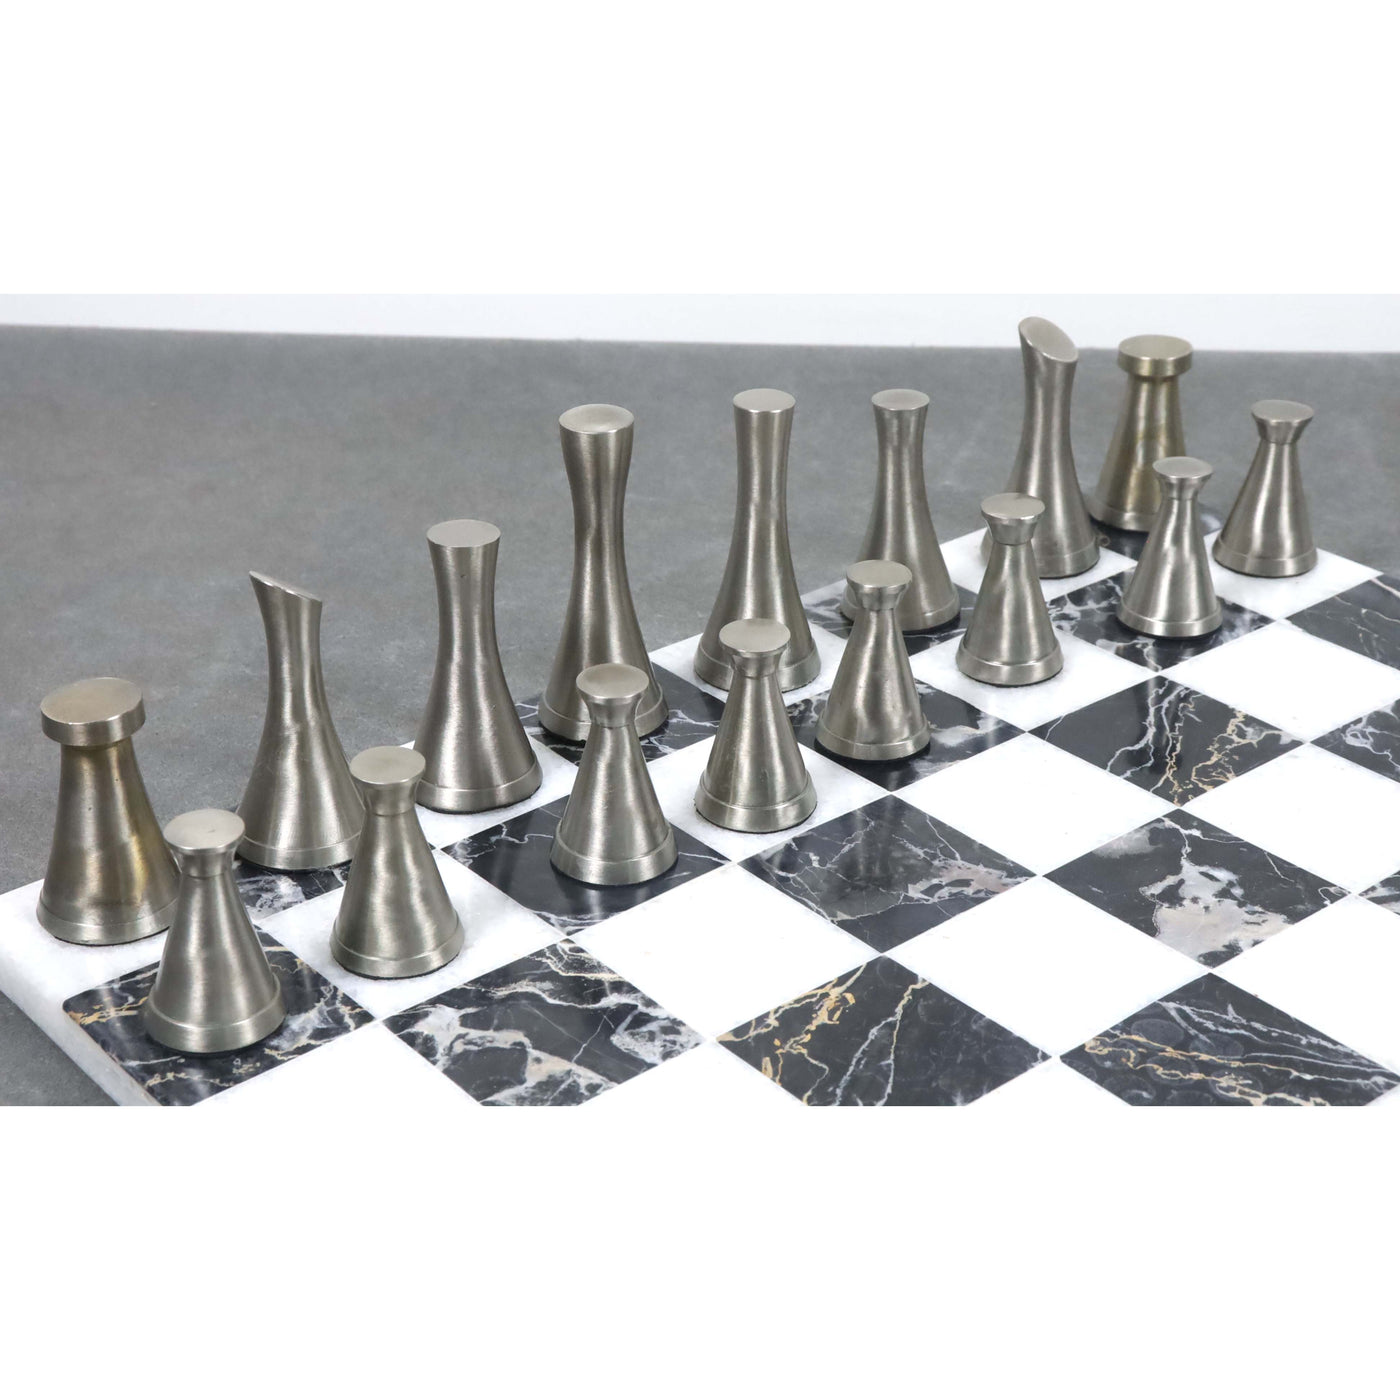 Brass Metal Luxury Chess Pieces Only Set - Silver & Antique -  Staunton Chess Set